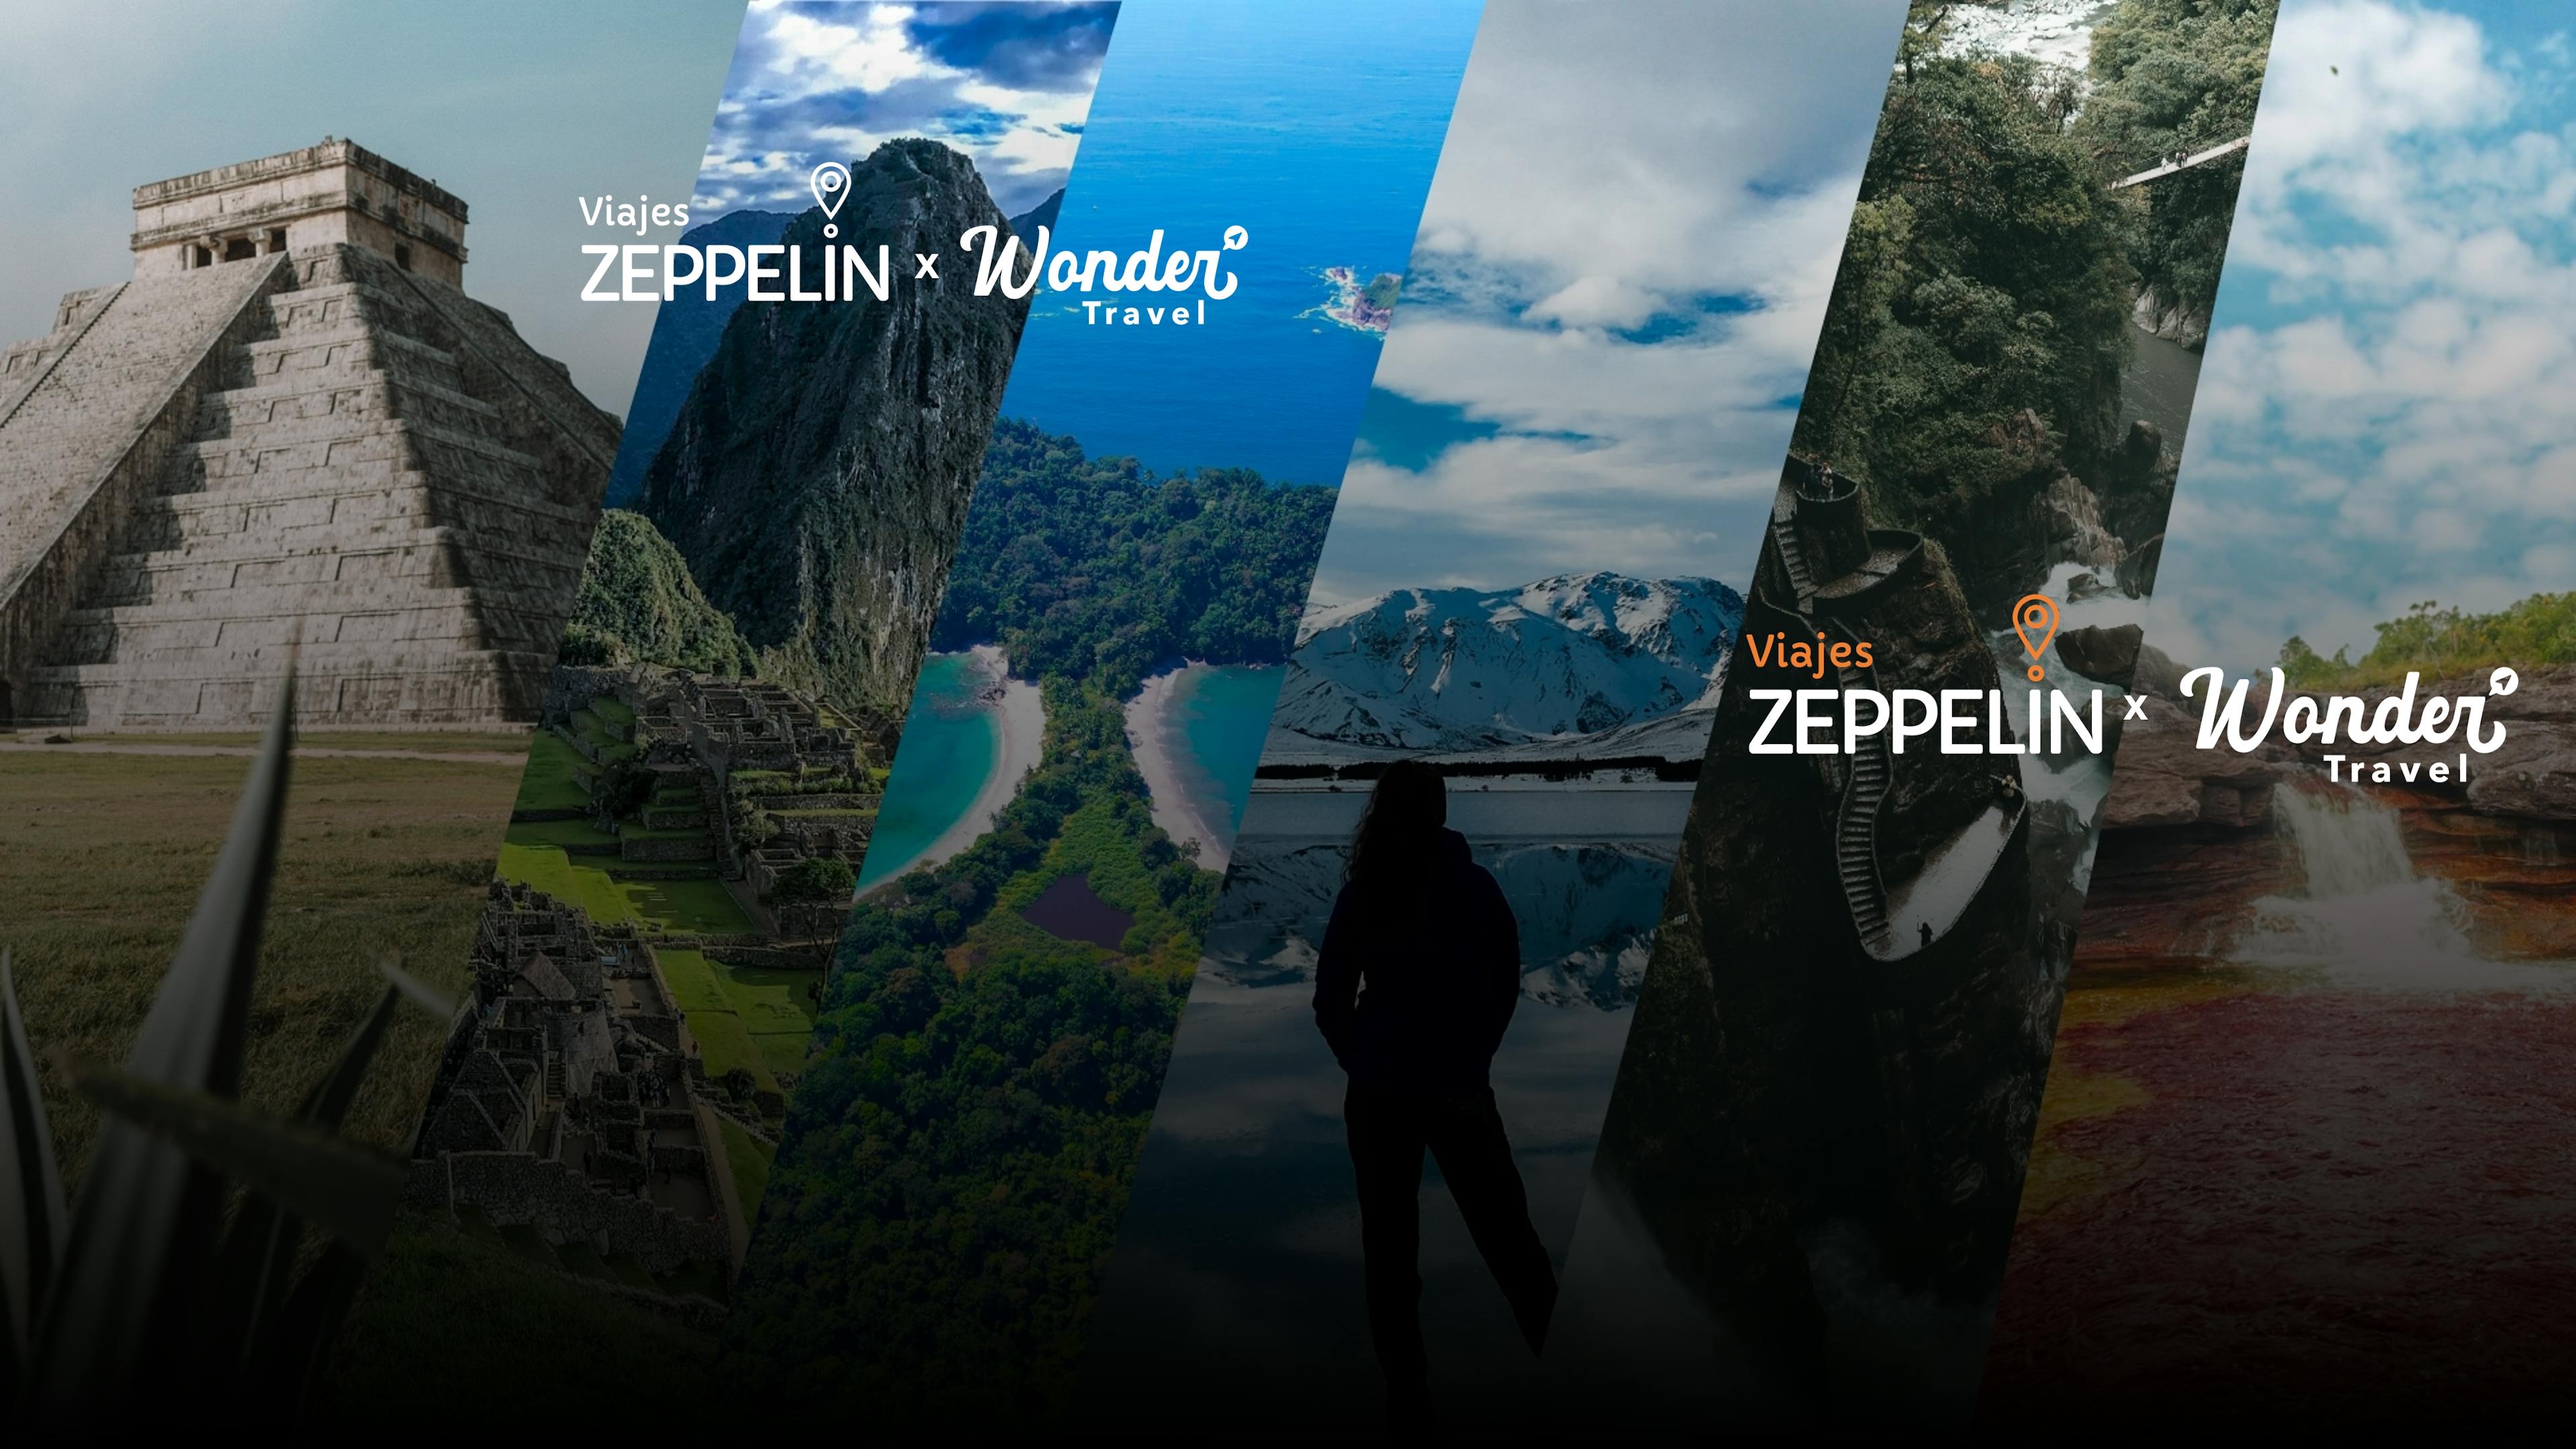 Travel with Zeppelin & Wonder!